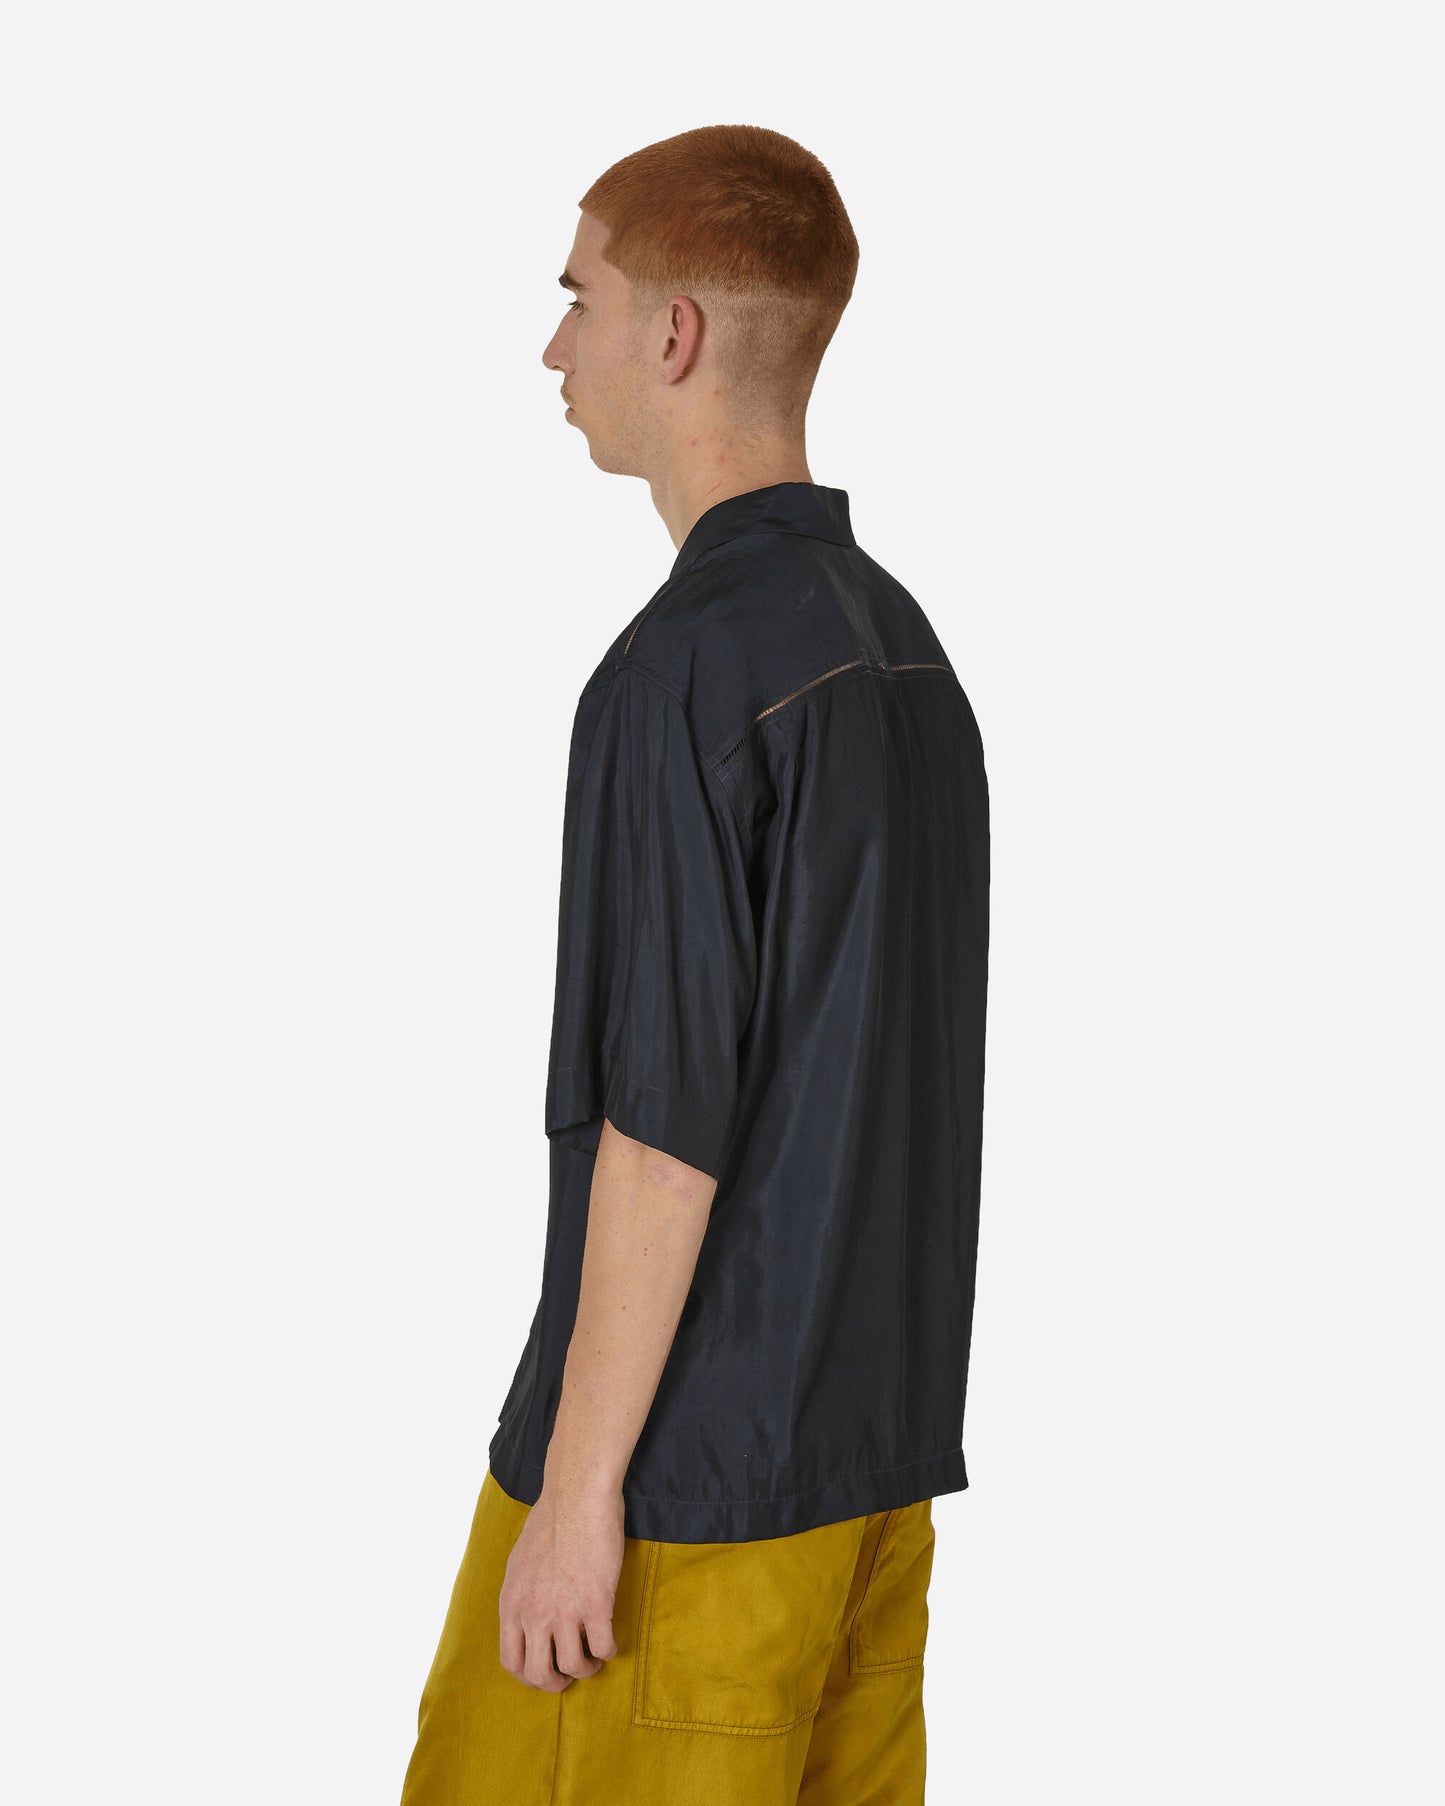 Dries Van Noten Curbank Shirt Anthracite Shirts Shortsleeve Shirt 241-020720-8355 901